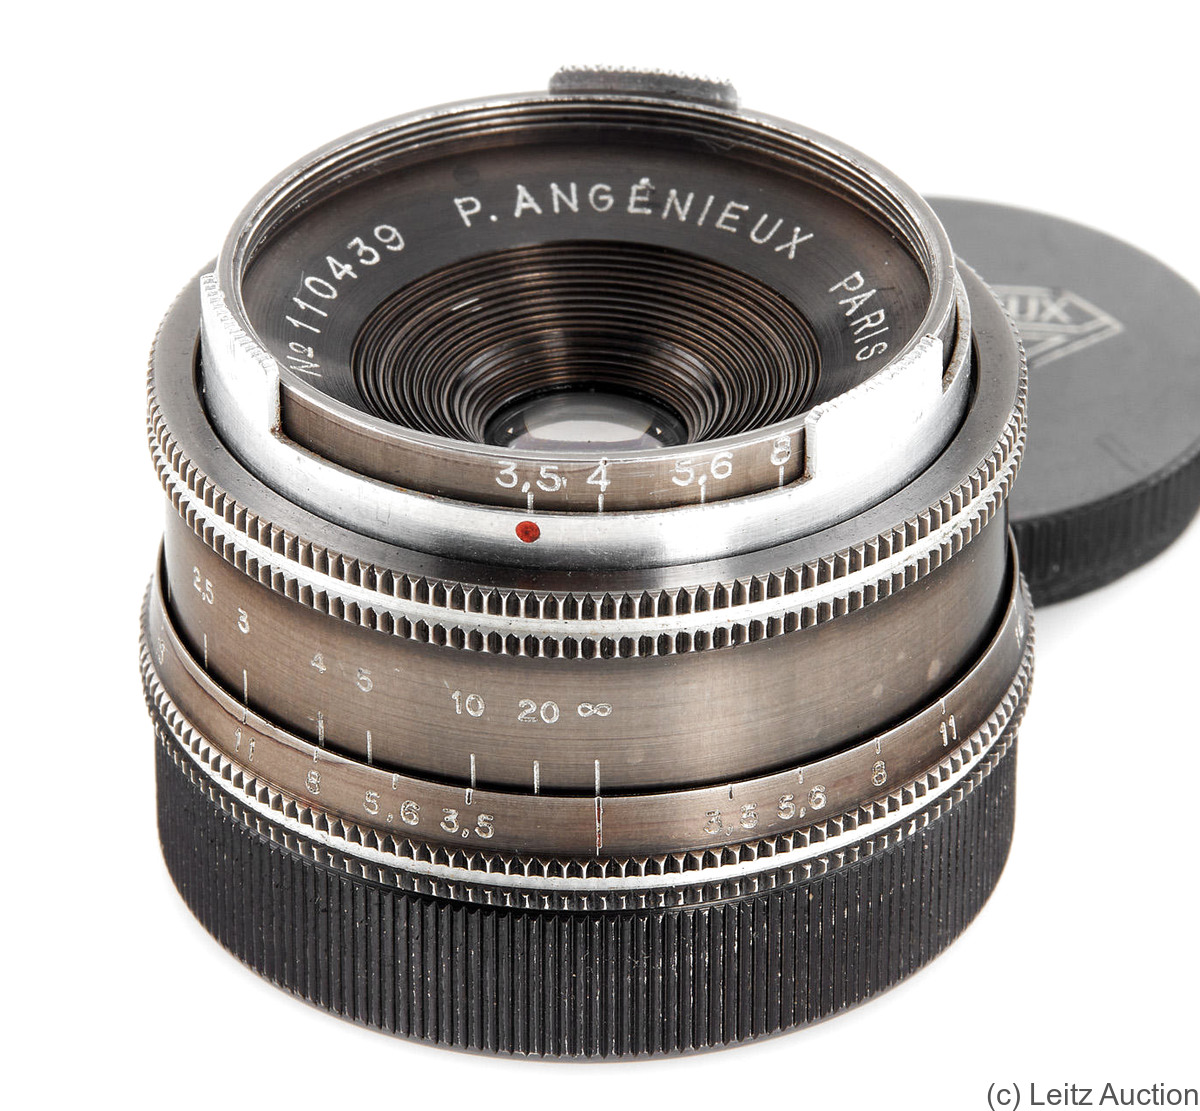 Angénieux: 35mm (3.5cm) f3.5 Type X1 (M39) camera